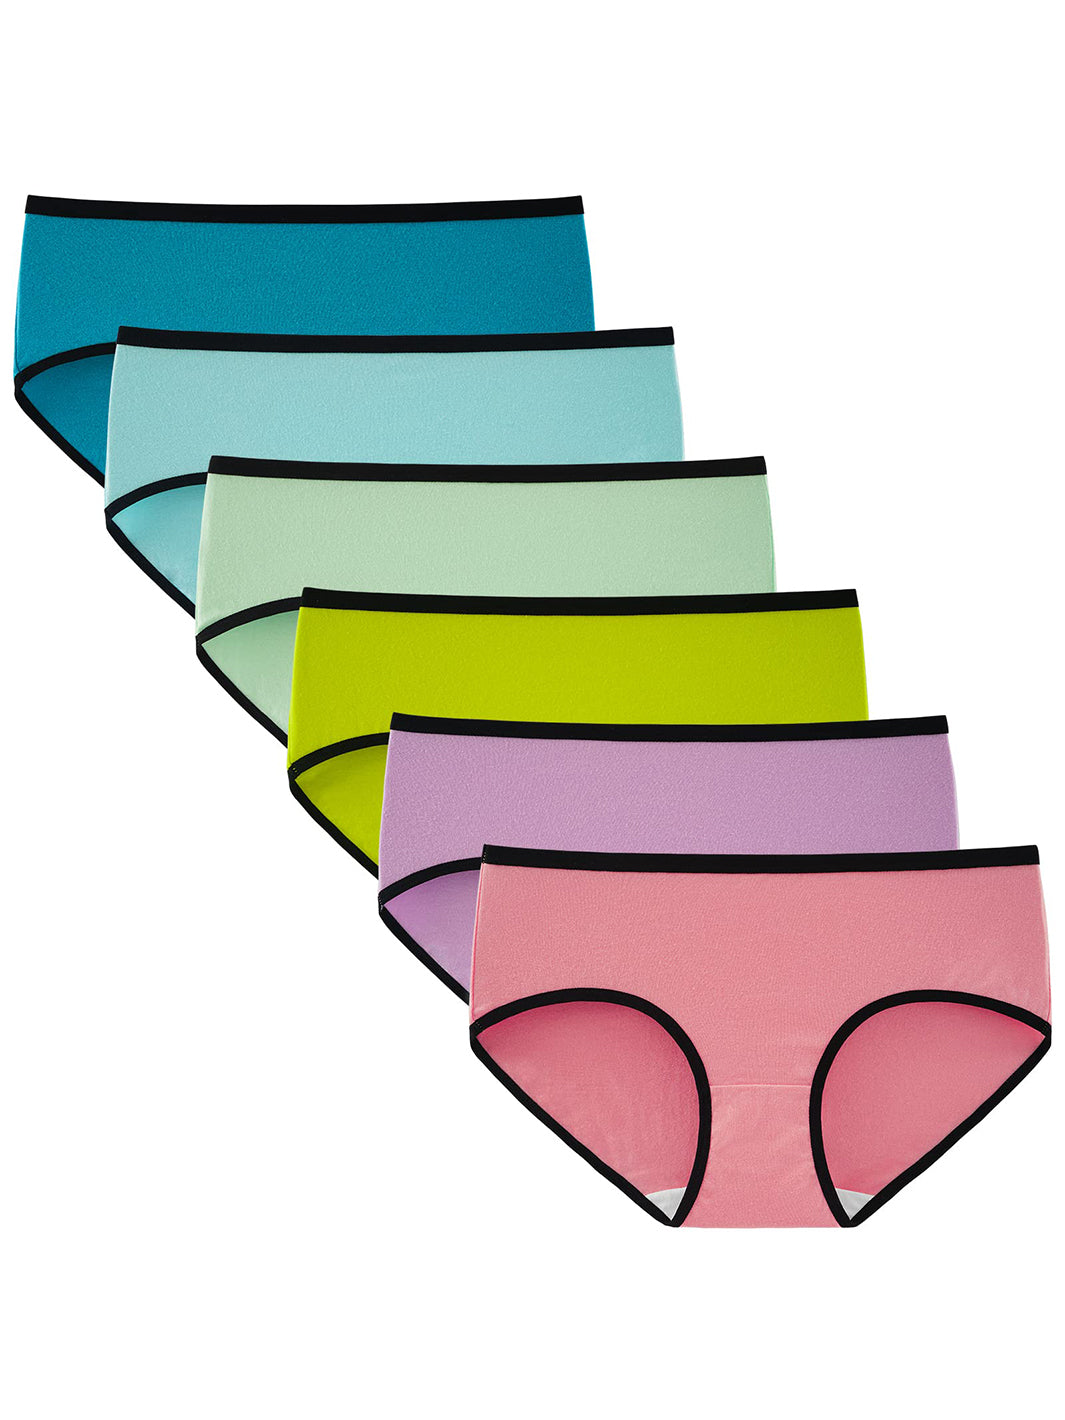 INNERSY Period Underwear for Teens Cotton Leekproof Menstrual Panties  3-Pack (XL(14-16 yrs), Refreshing Blue Pink Polka Dots)